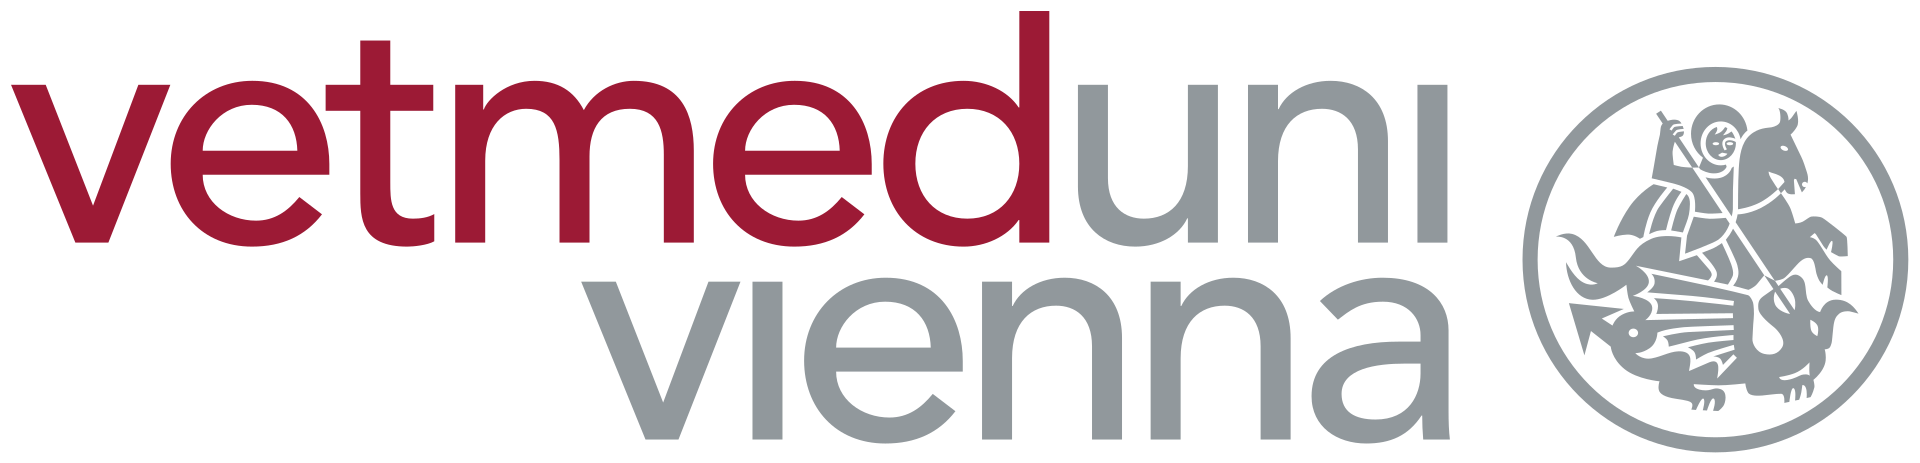 University of Veterinary Medicine, Vienna logo